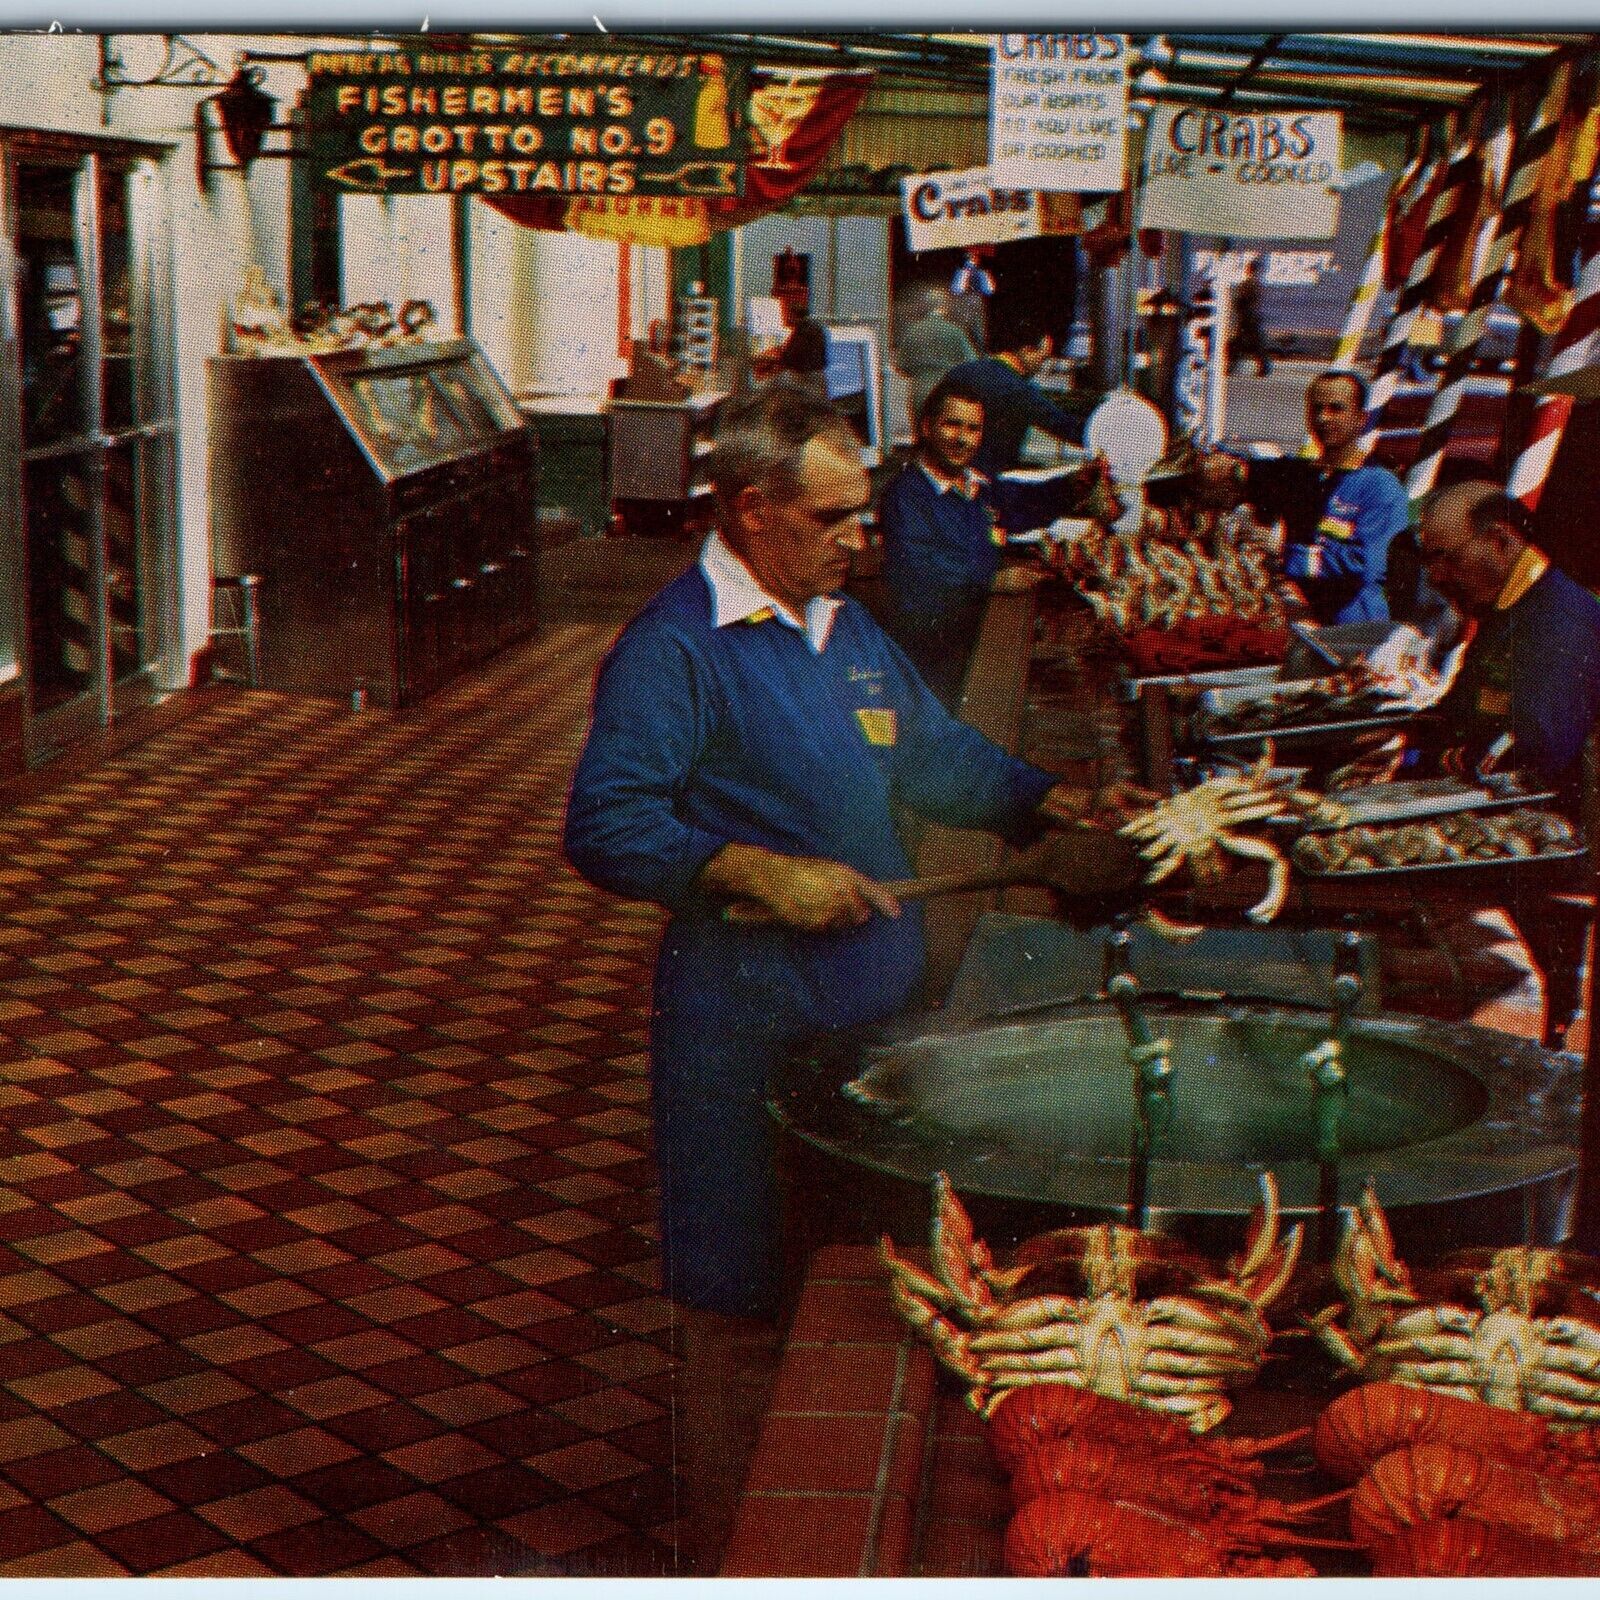 c1960s San Francisco, CA No. 9 Fisherman's Wharf Sidewalk Crab Stand Grotto A225